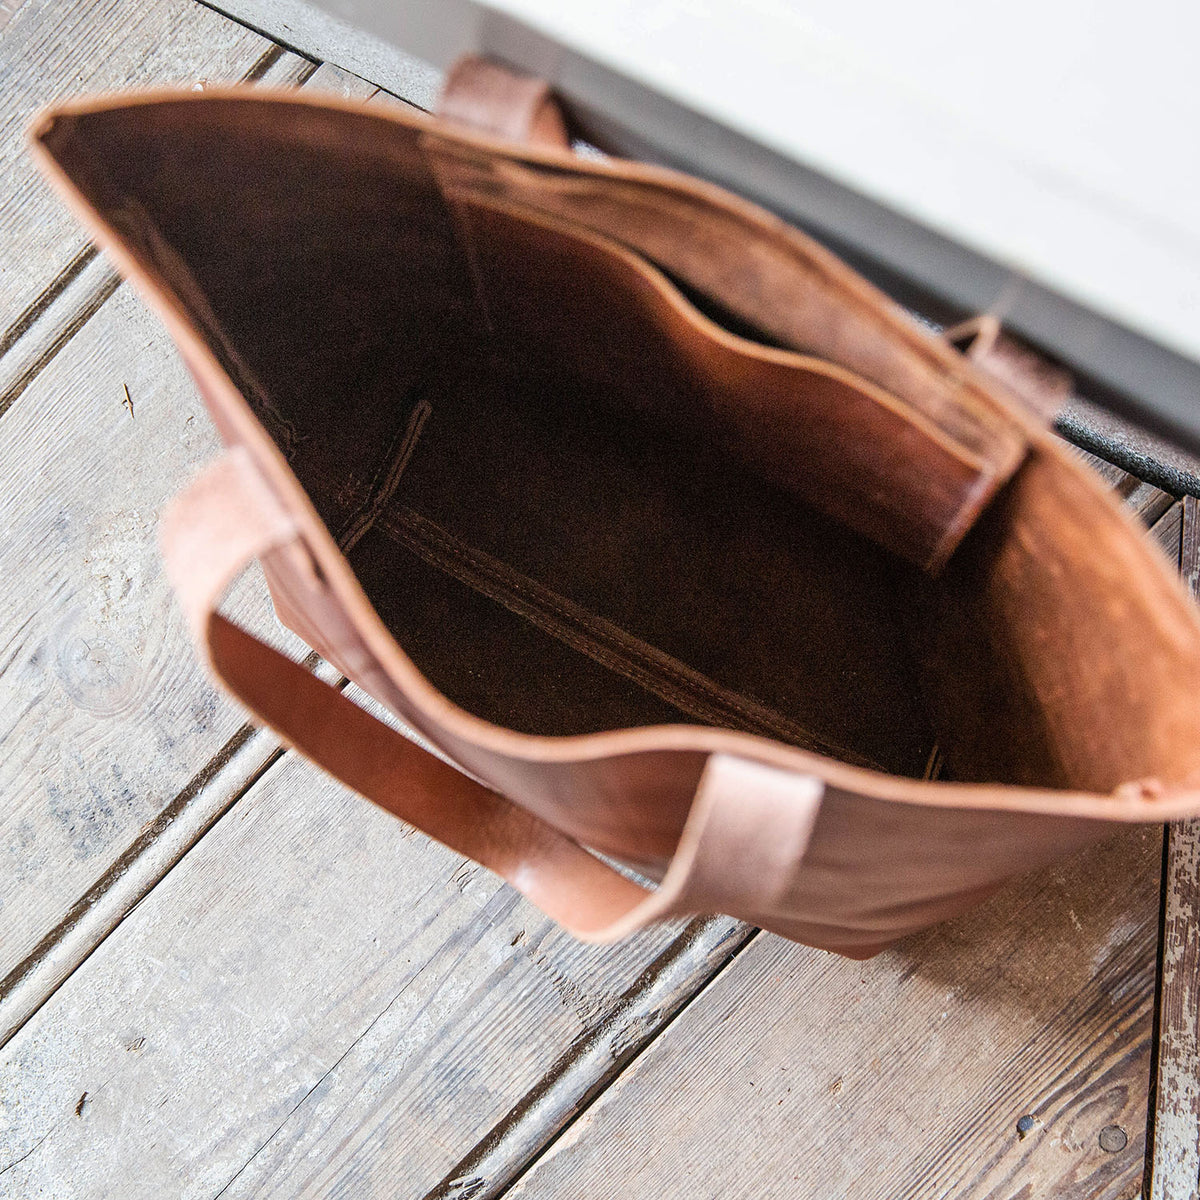 The Ashley Tote Fine Leather Handbag Purse Bag